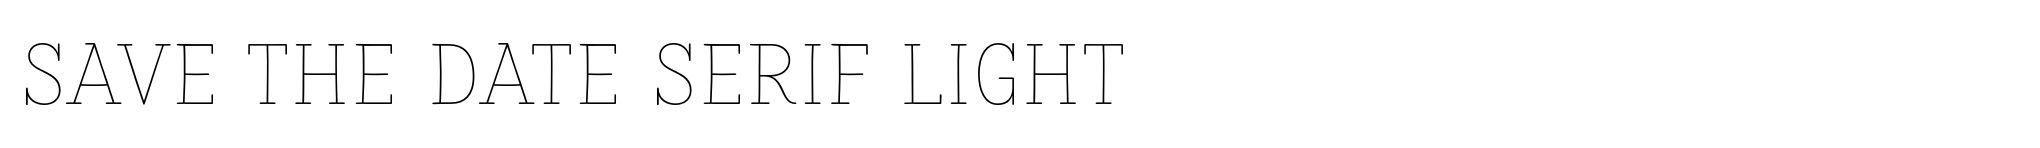 Save The Date Serif Light image